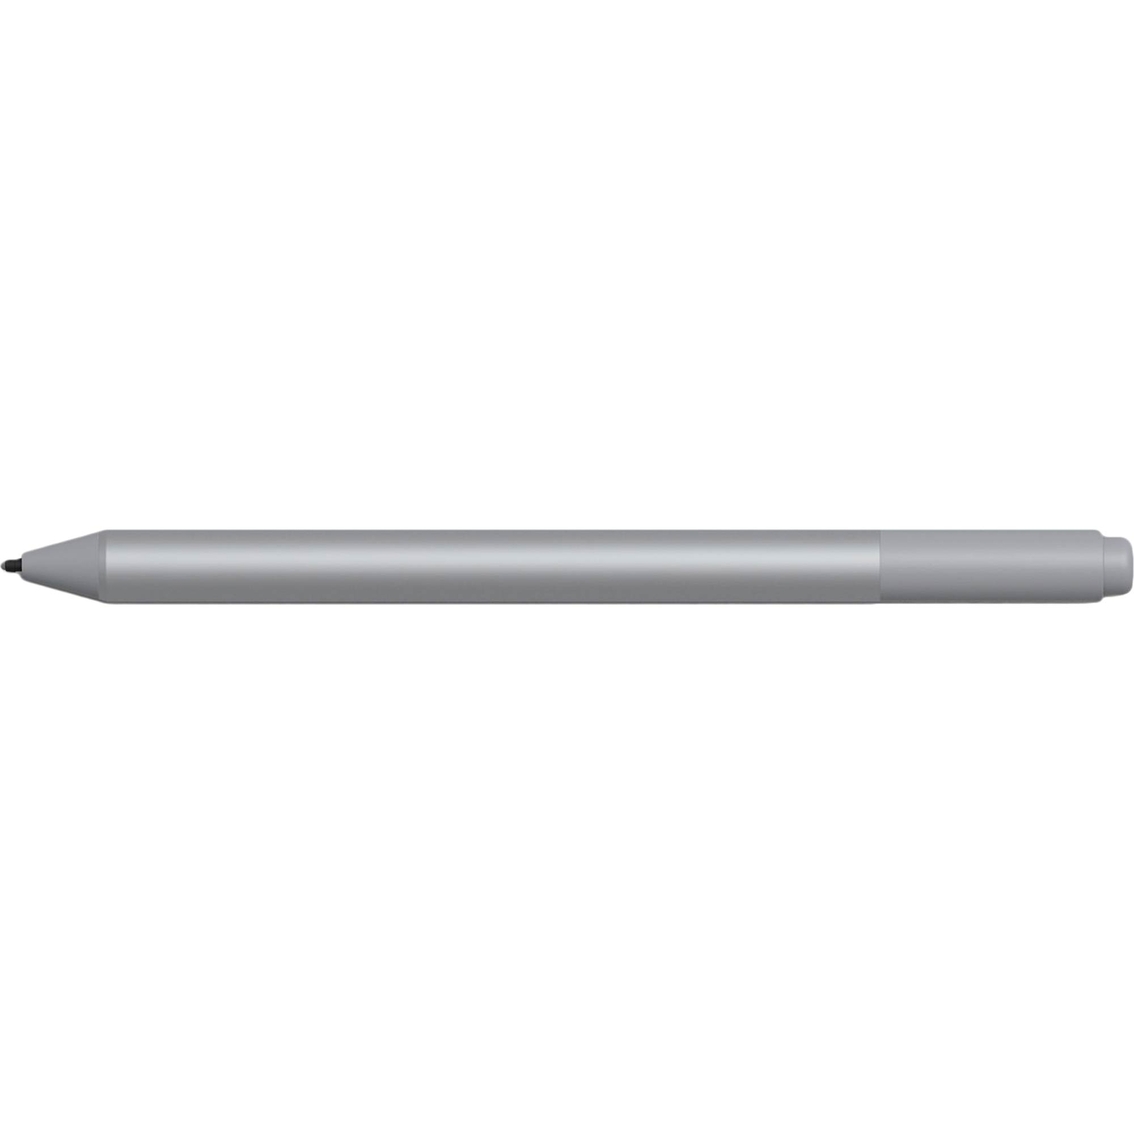 Microsoft Surface Pen - Image 2 of 2